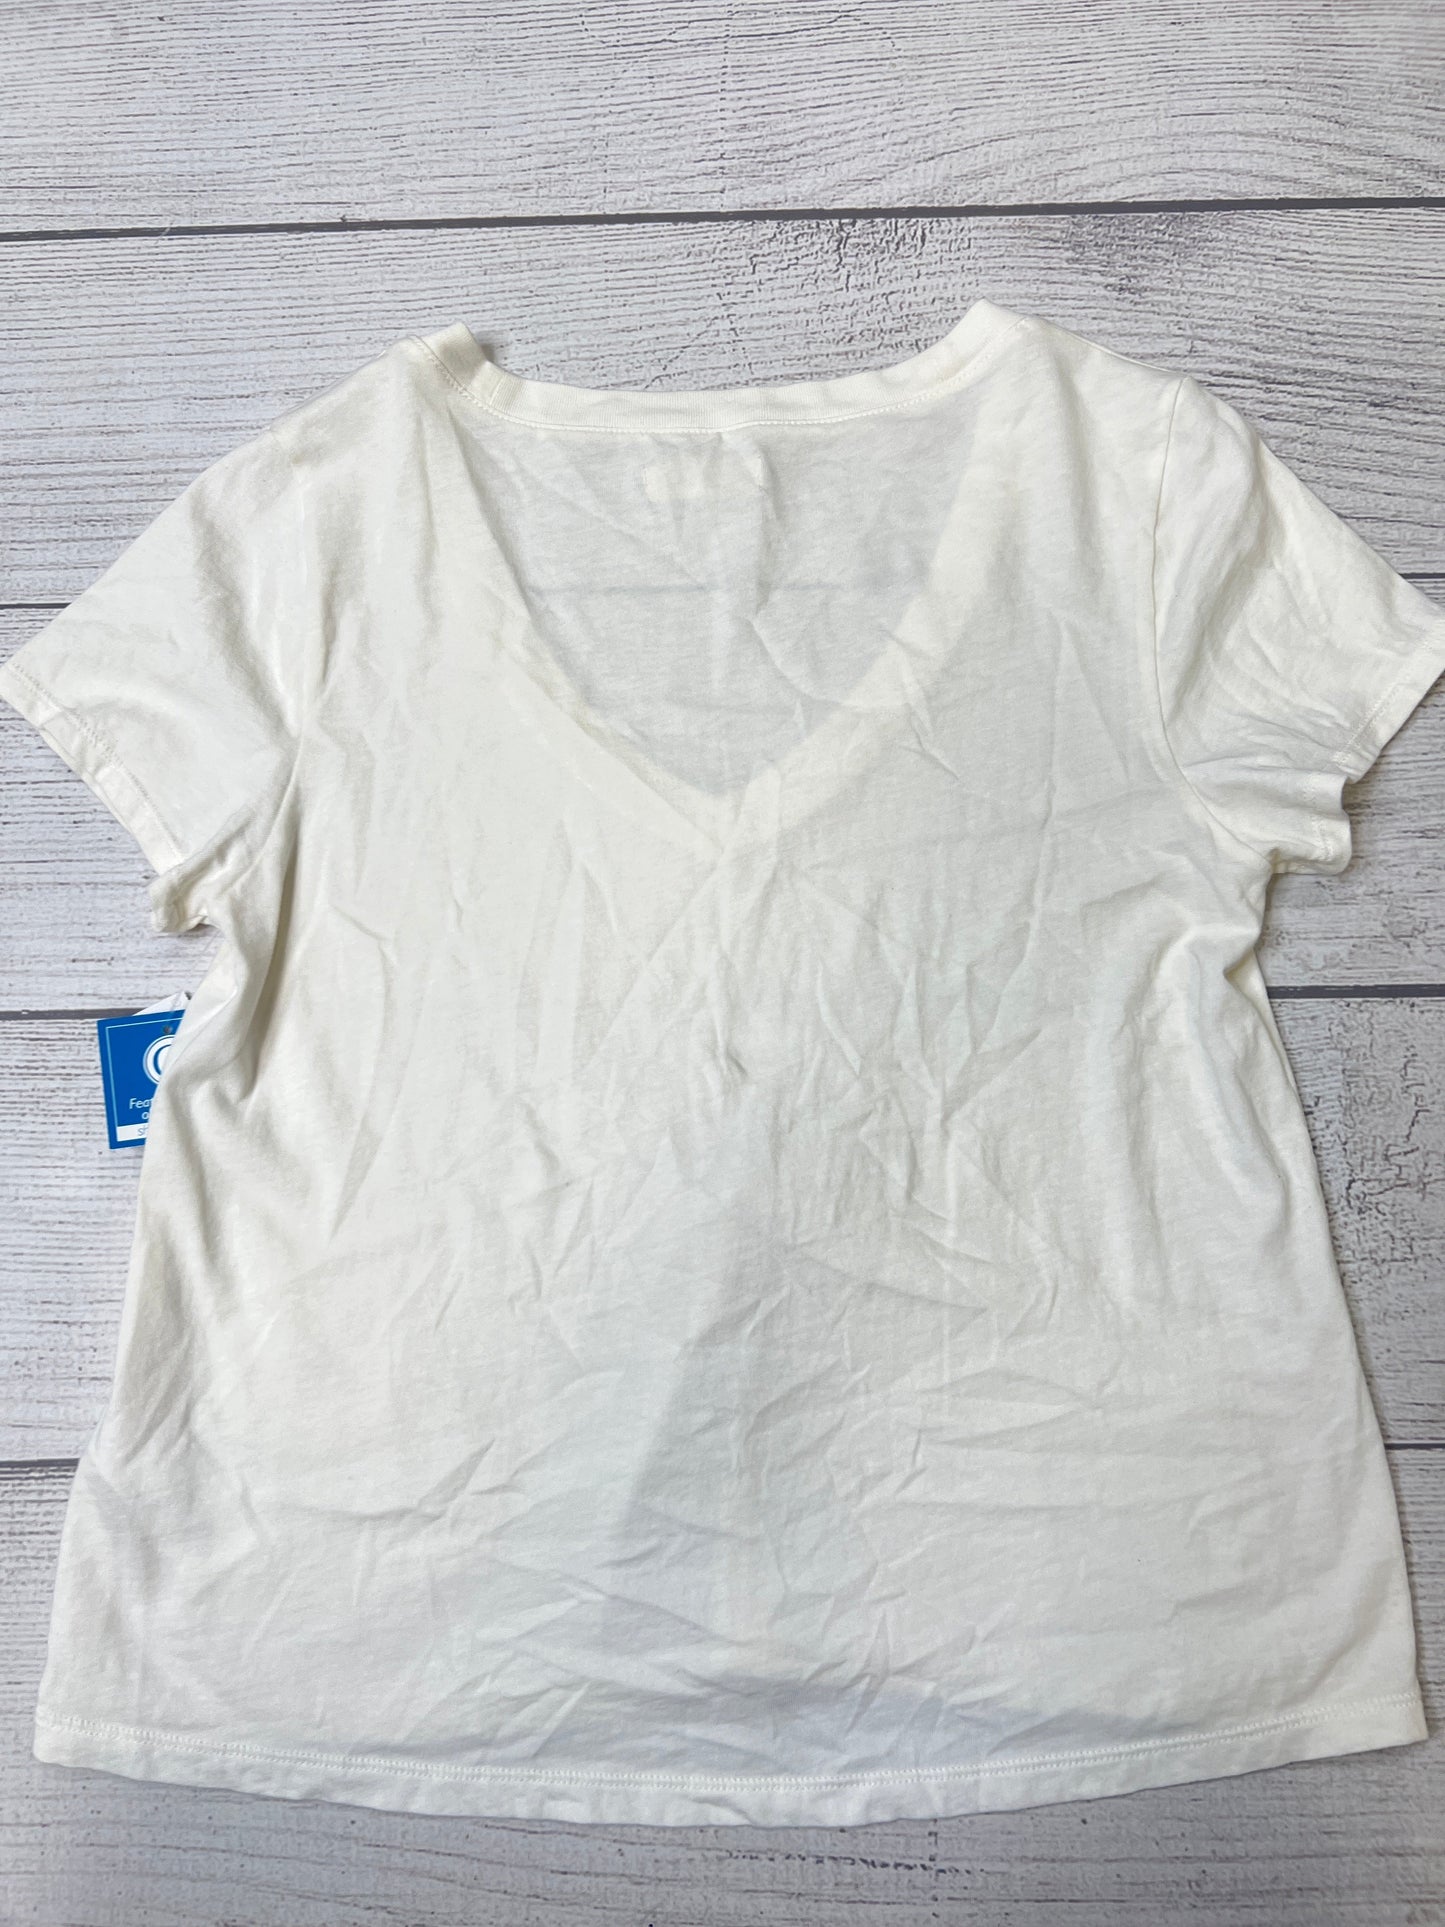 White Top Short Sleeve Basic Madewell, Size S